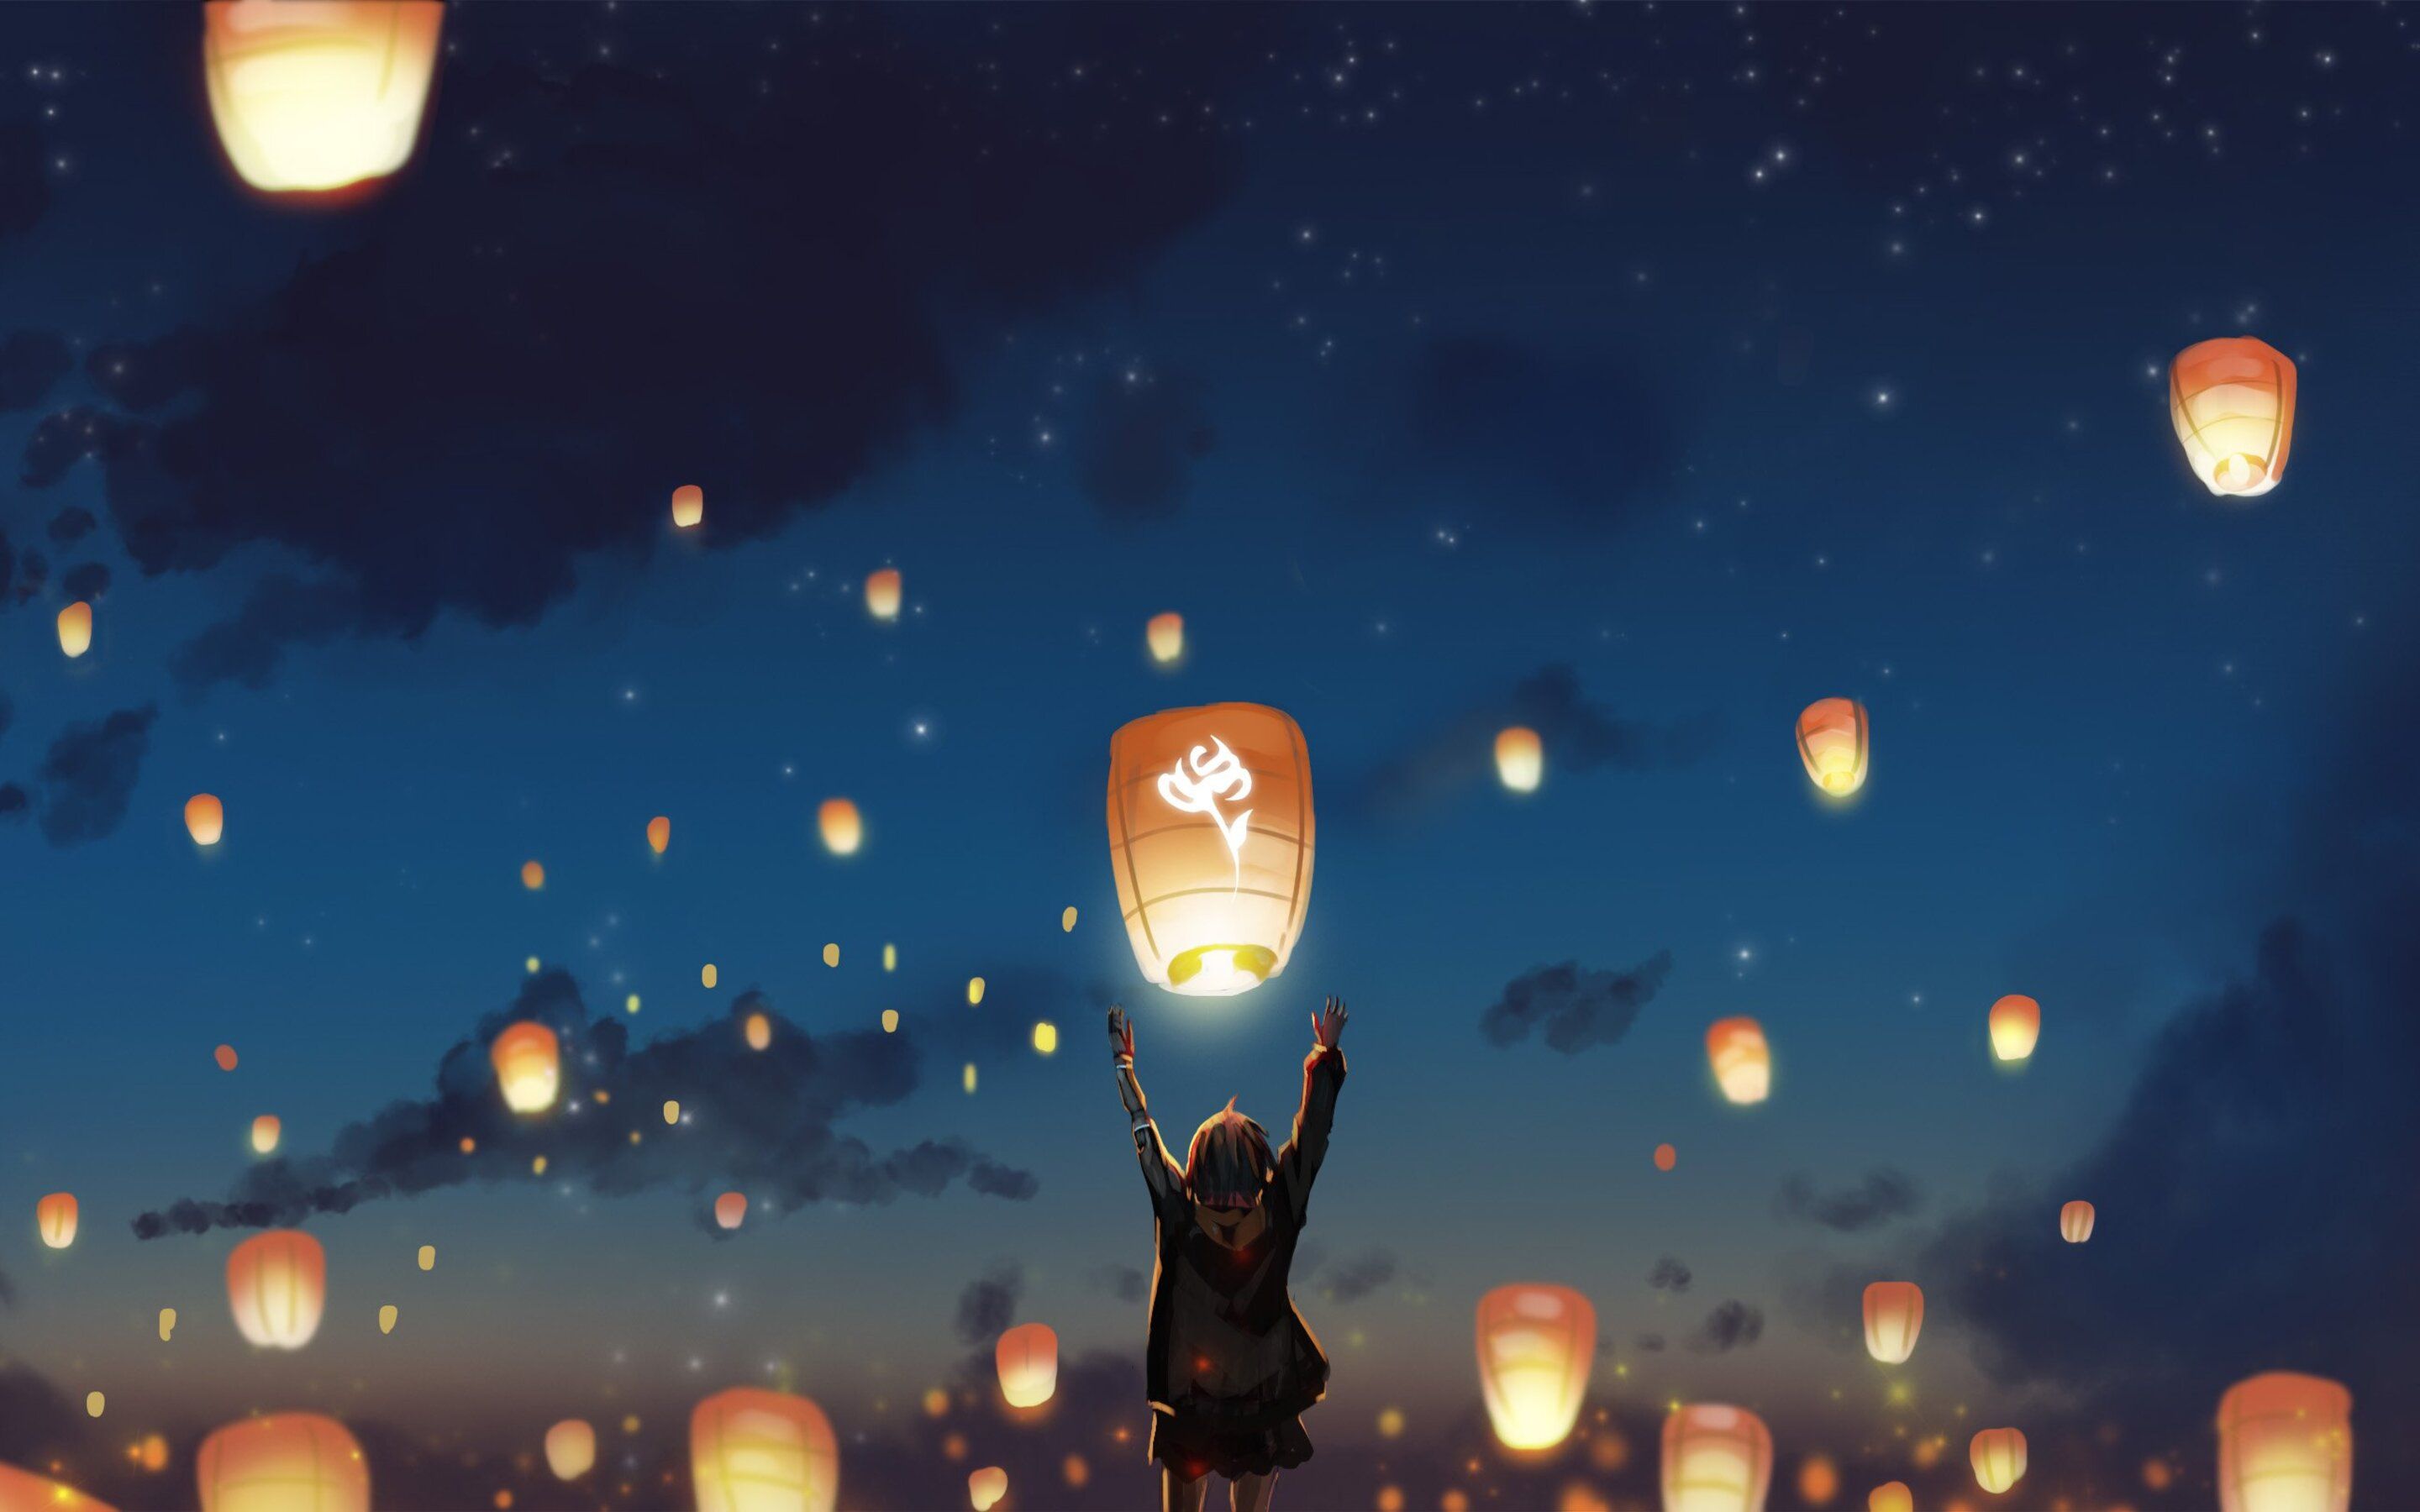 Lantern Night Clouds Lights Anime Stars Macbook Pro Retina HD 4k Wallpaper, Image, Background, Photo and Picture